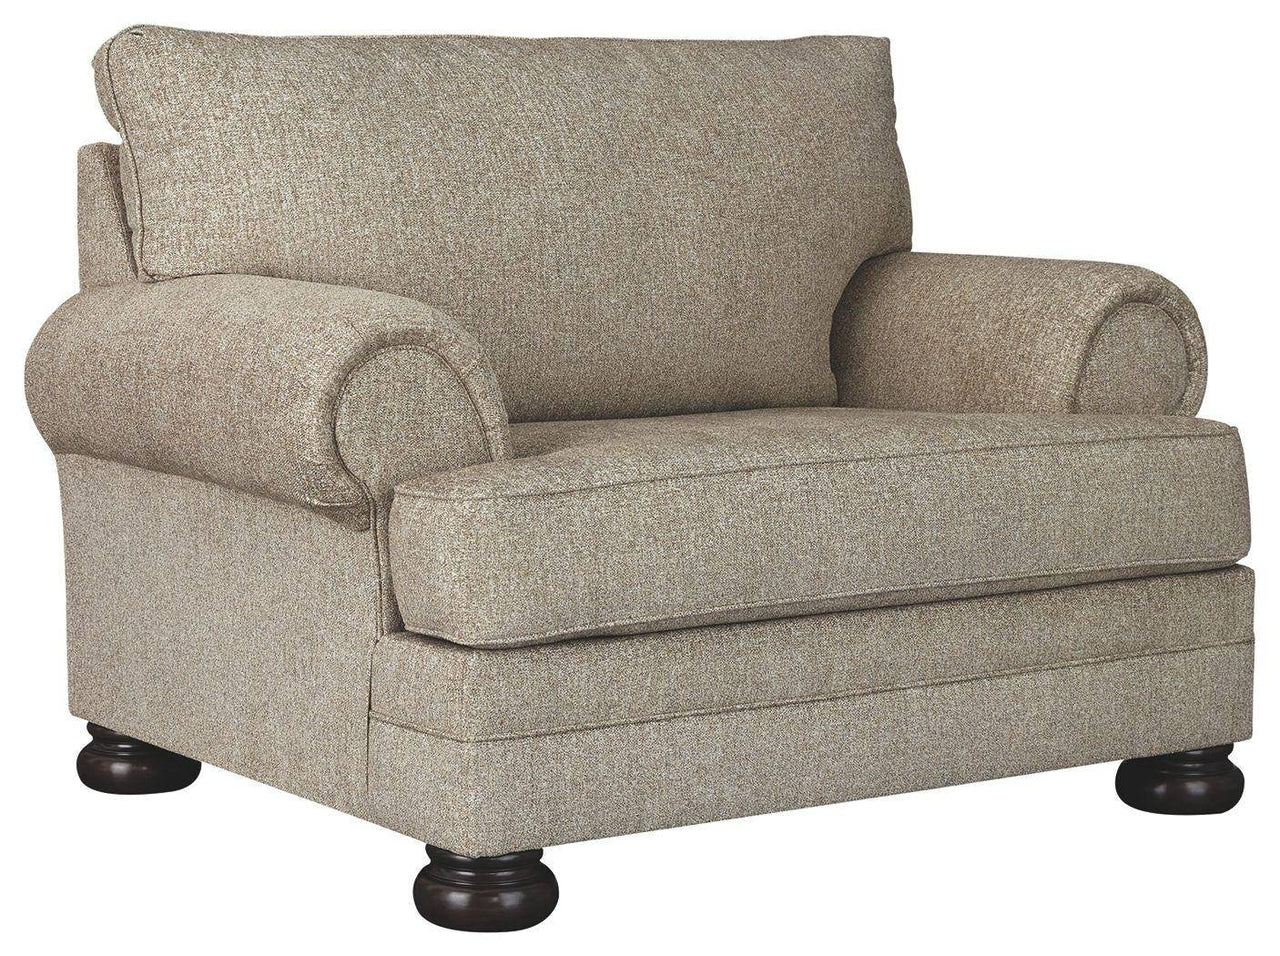 Kananwood - Oatmeal - Chair And A Half Tony's Home Furnishings Furniture. Beds. Dressers. Sofas.